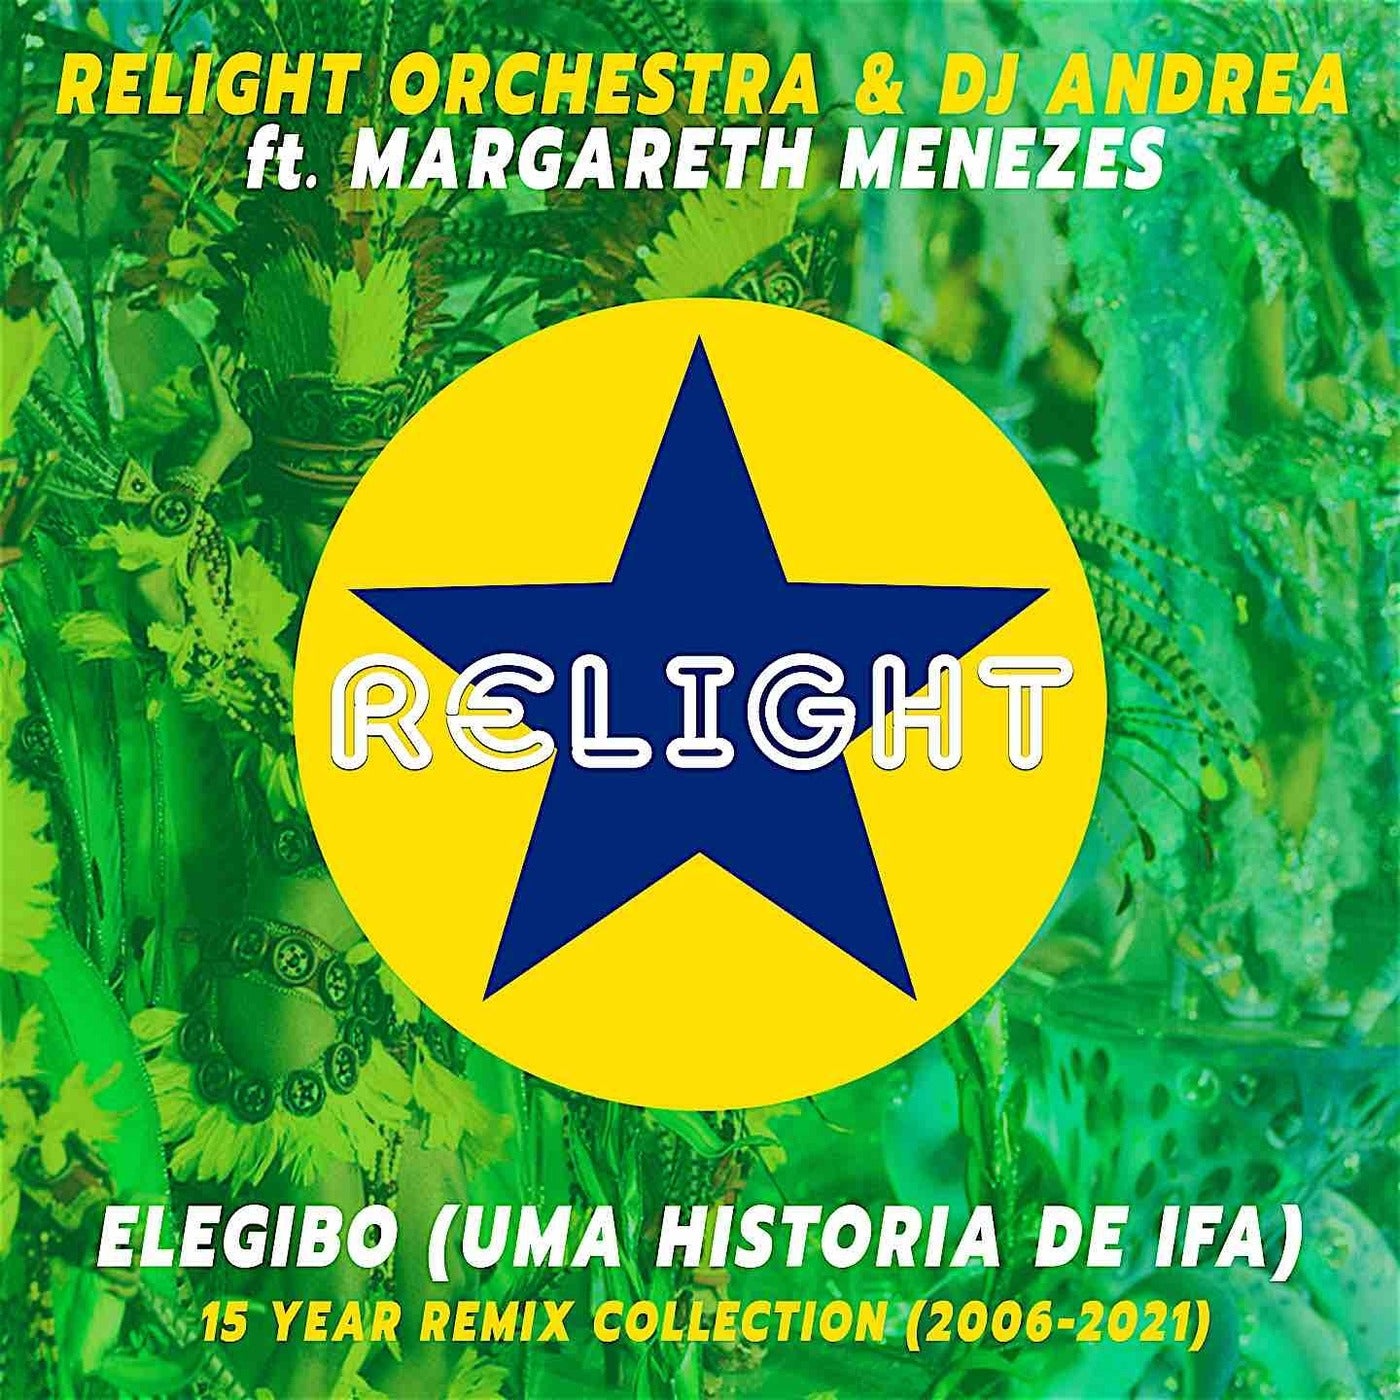 Elegibo (Uma Historia de Ifa) - 15 Year Remix Collection